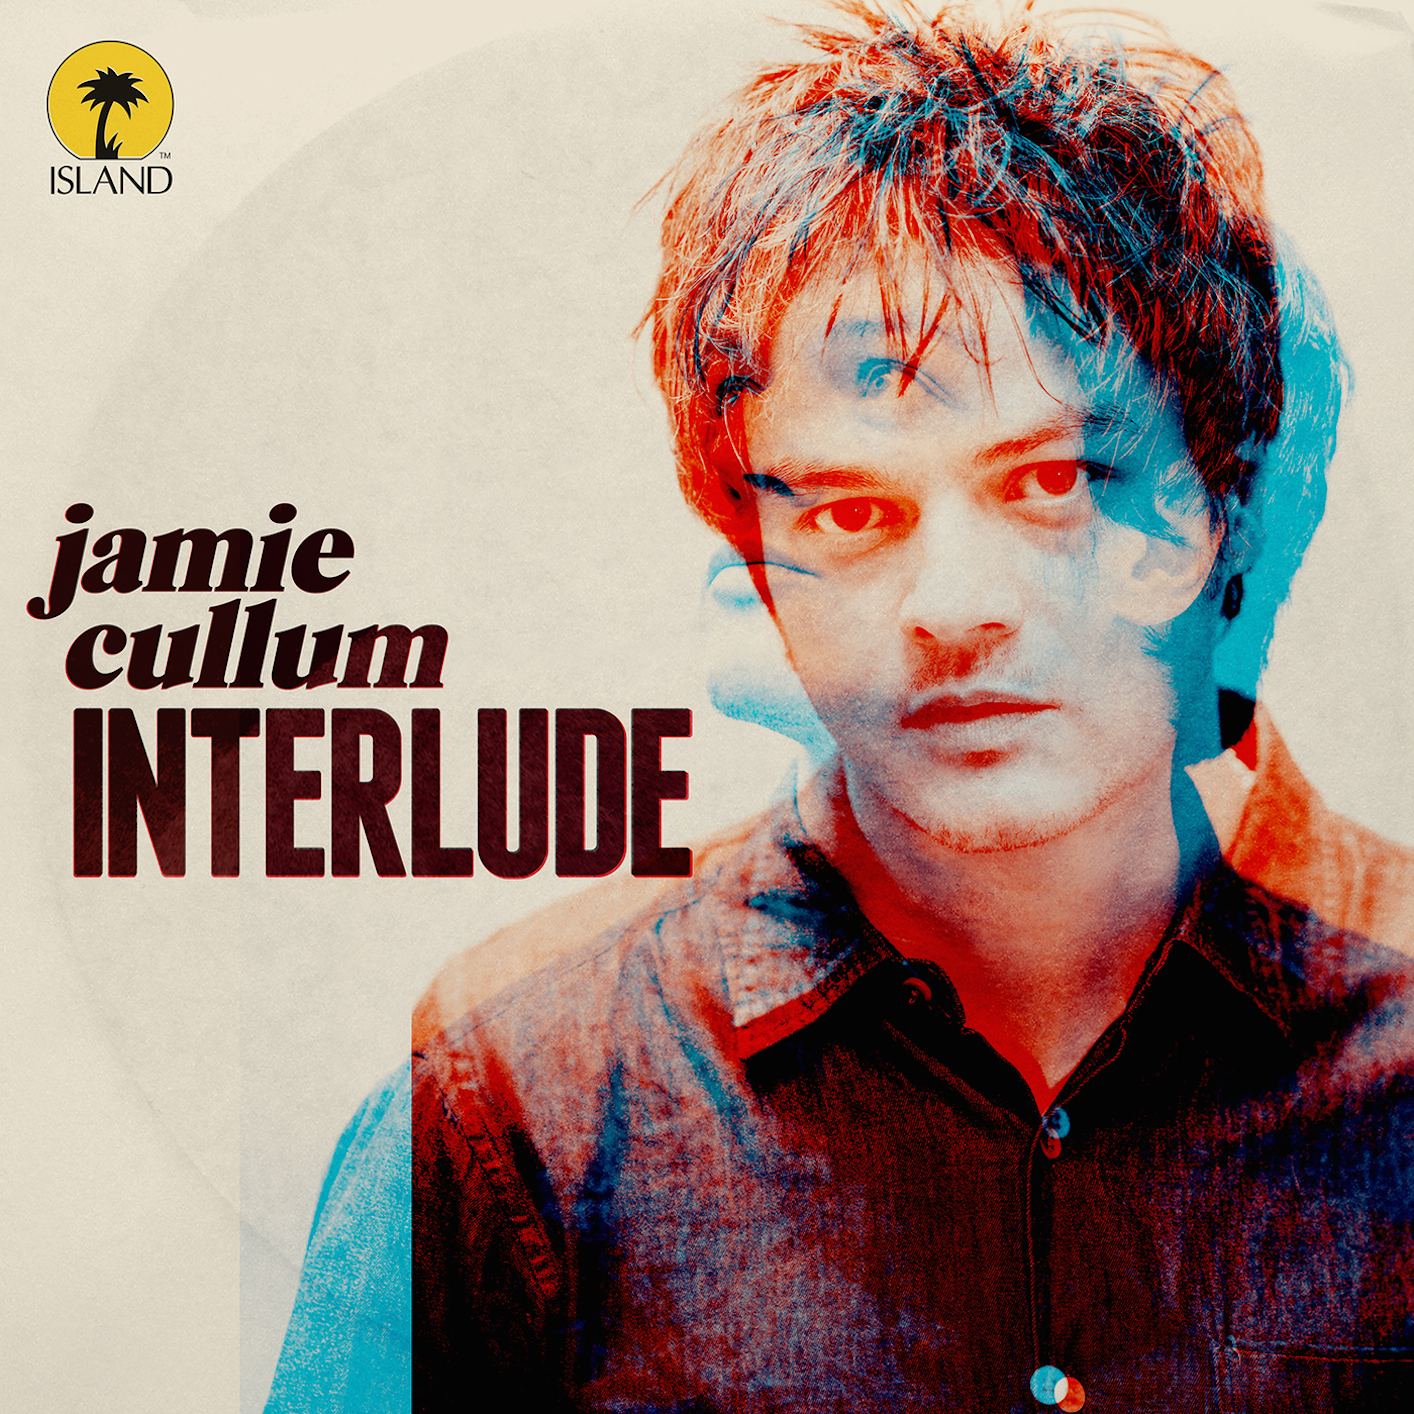 Interlude". Album of Jamie buy or |